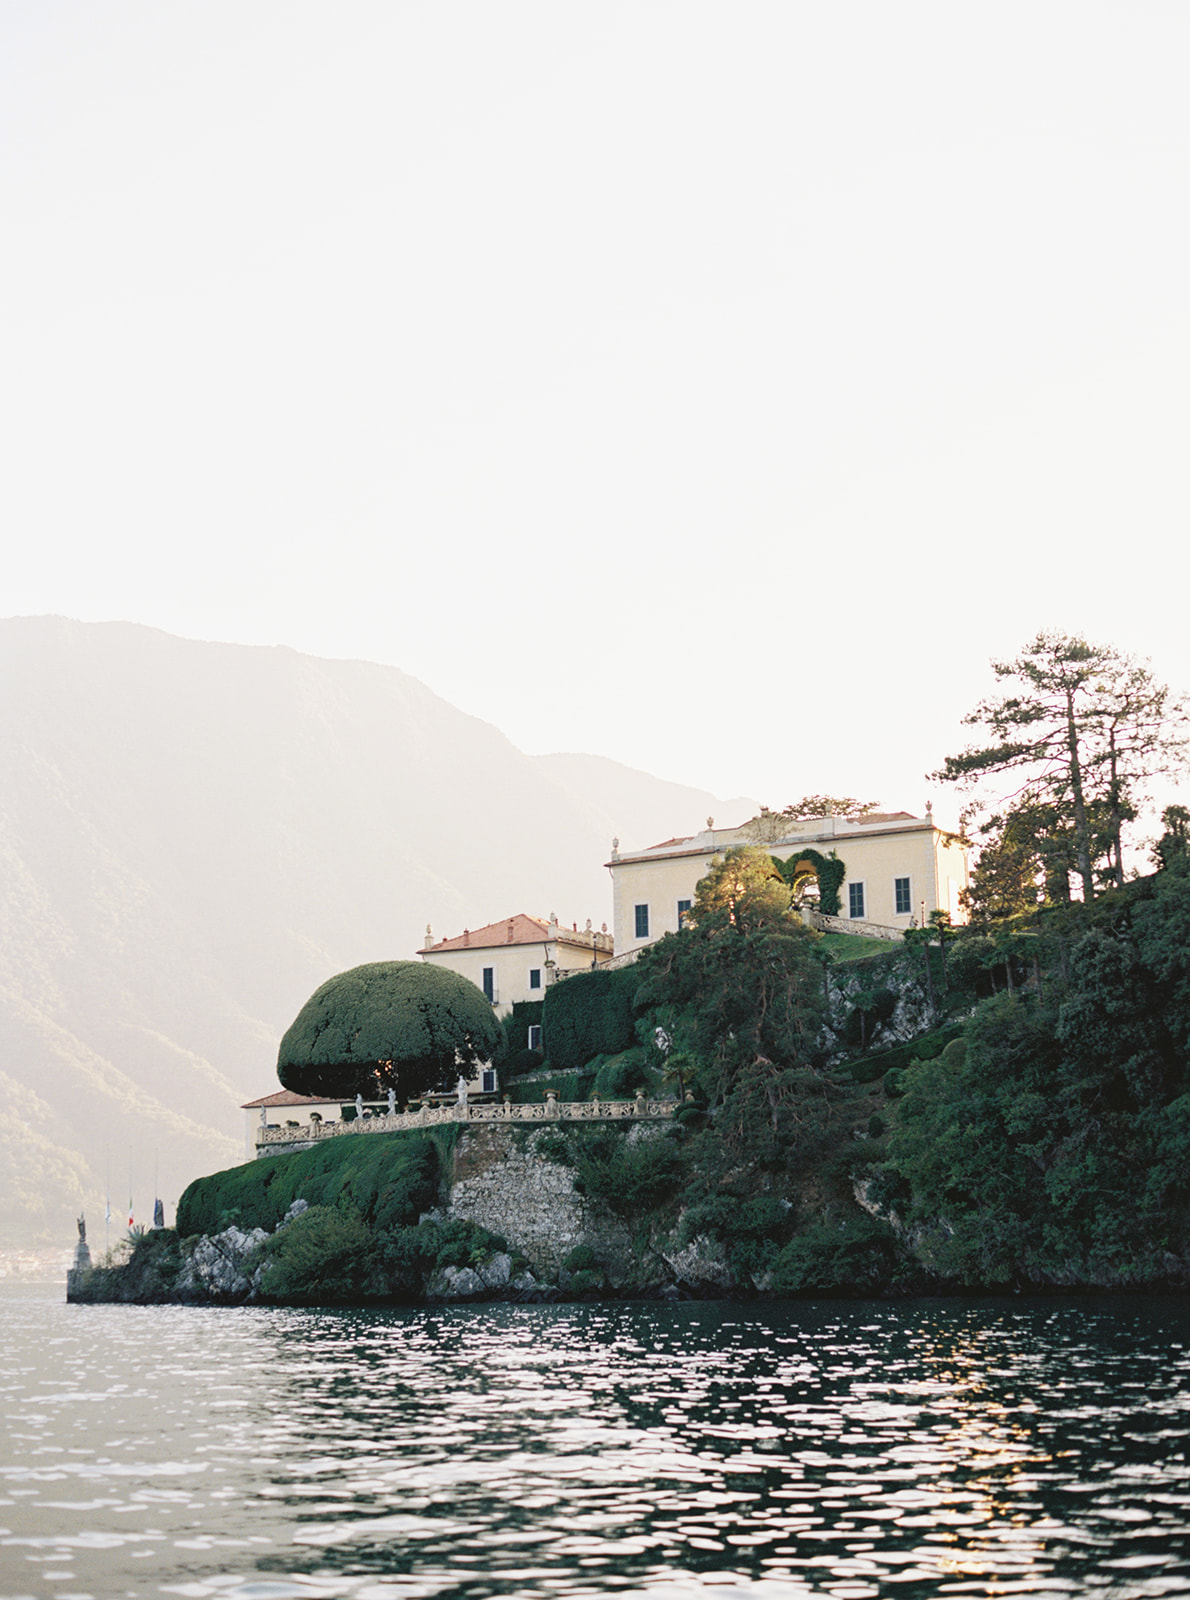 Villa Balbianello from the water in Lake Como, Italy